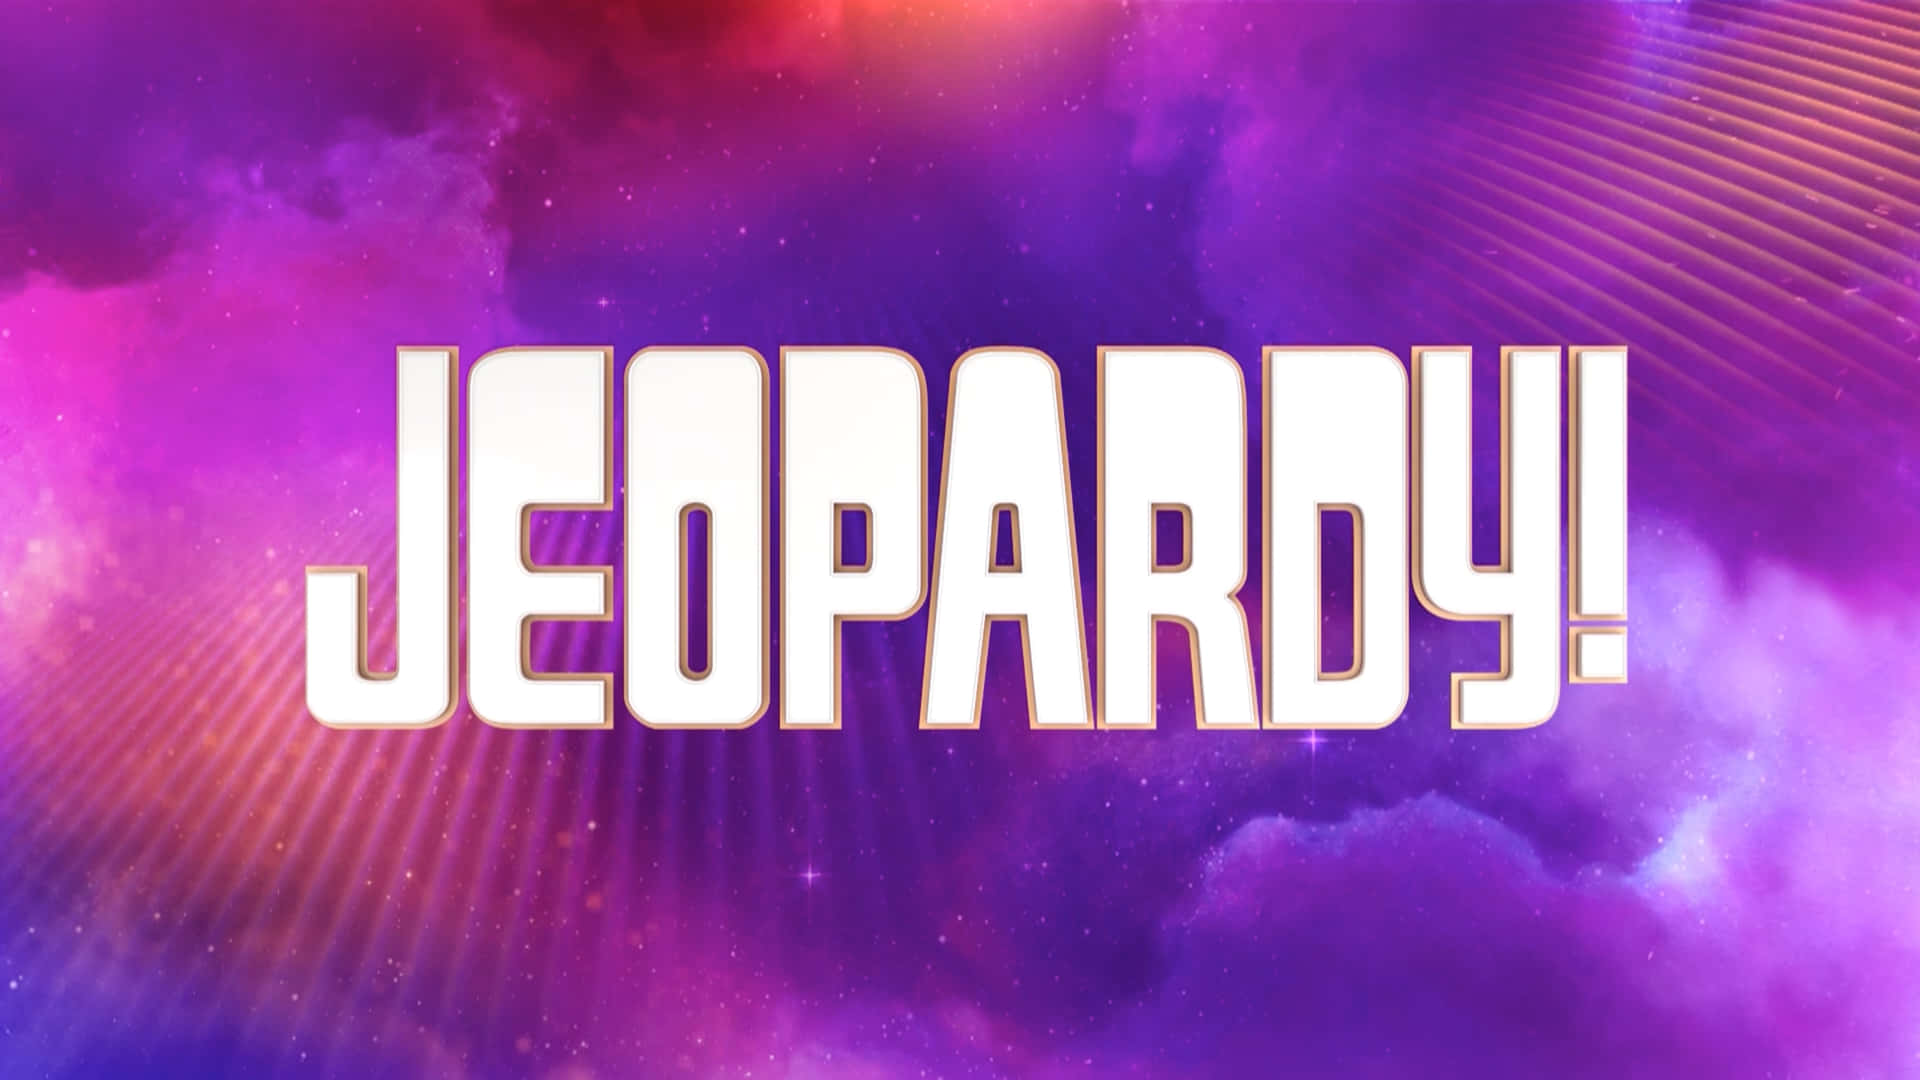 Jeopardy Logo With A Purple Background